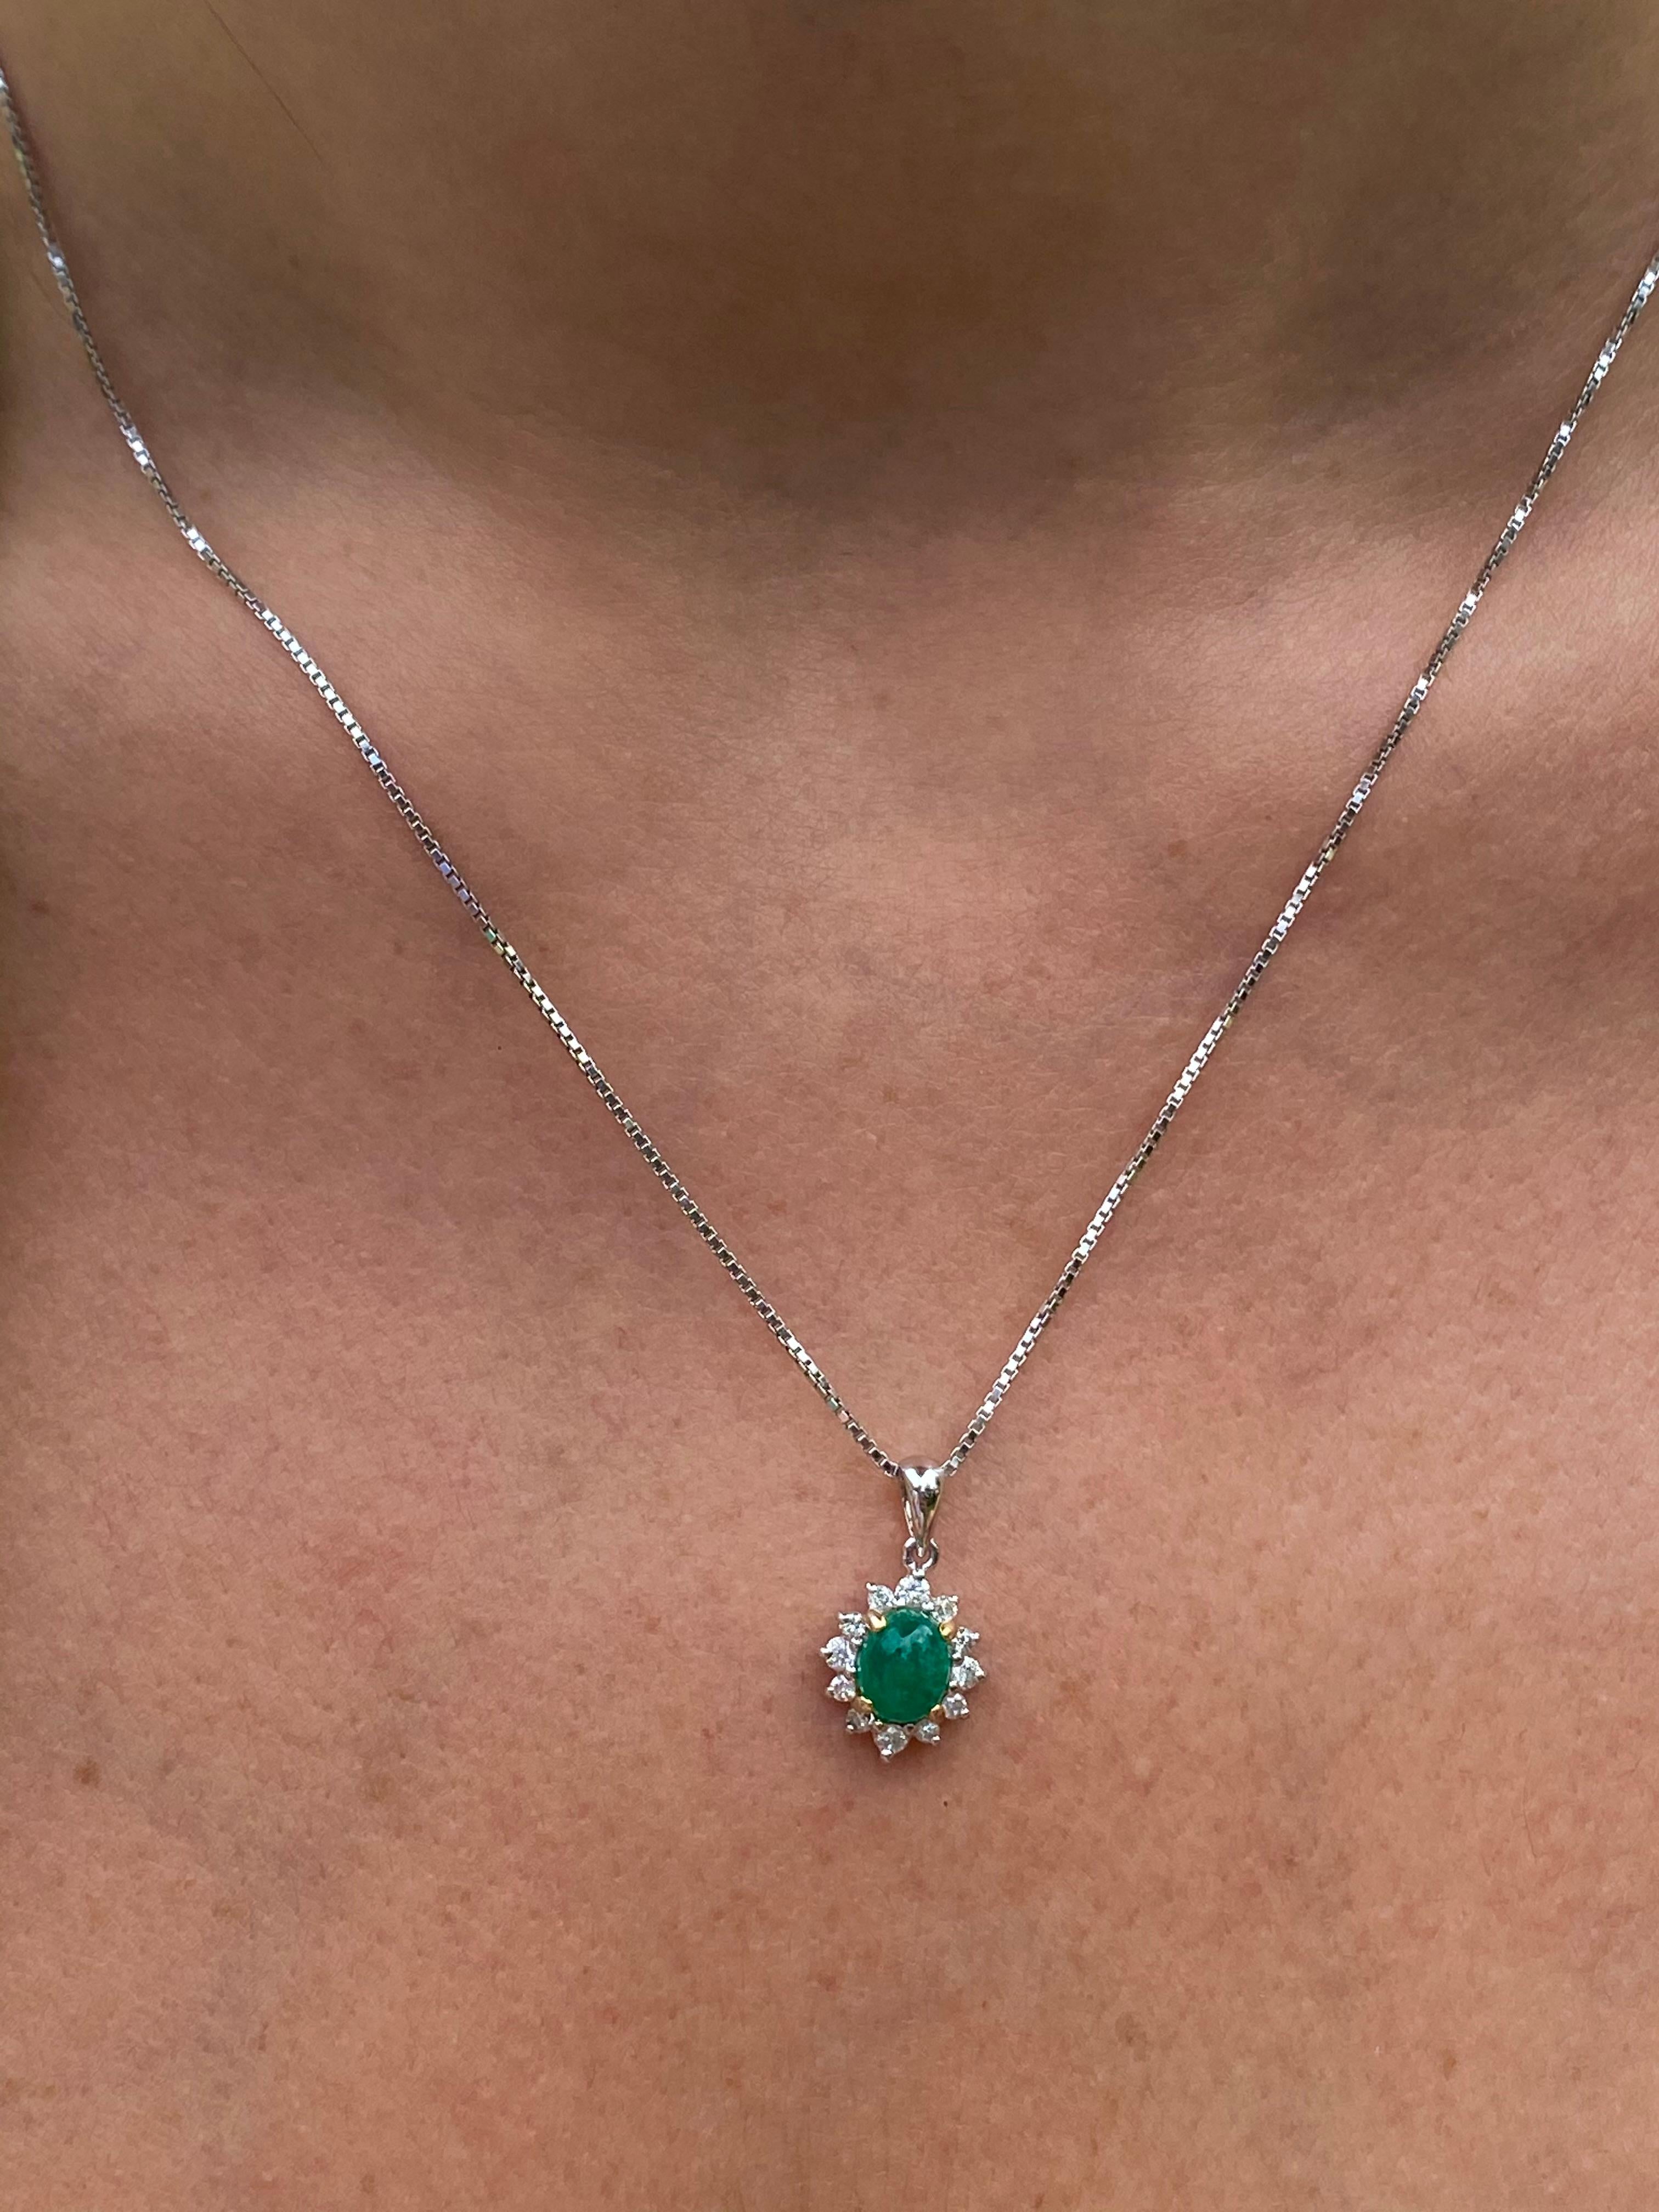 Emerald Cut 0.74 Carat Oval-Cut Colombian Emerald and Diamond 18 Karat White Gold Pendant For Sale